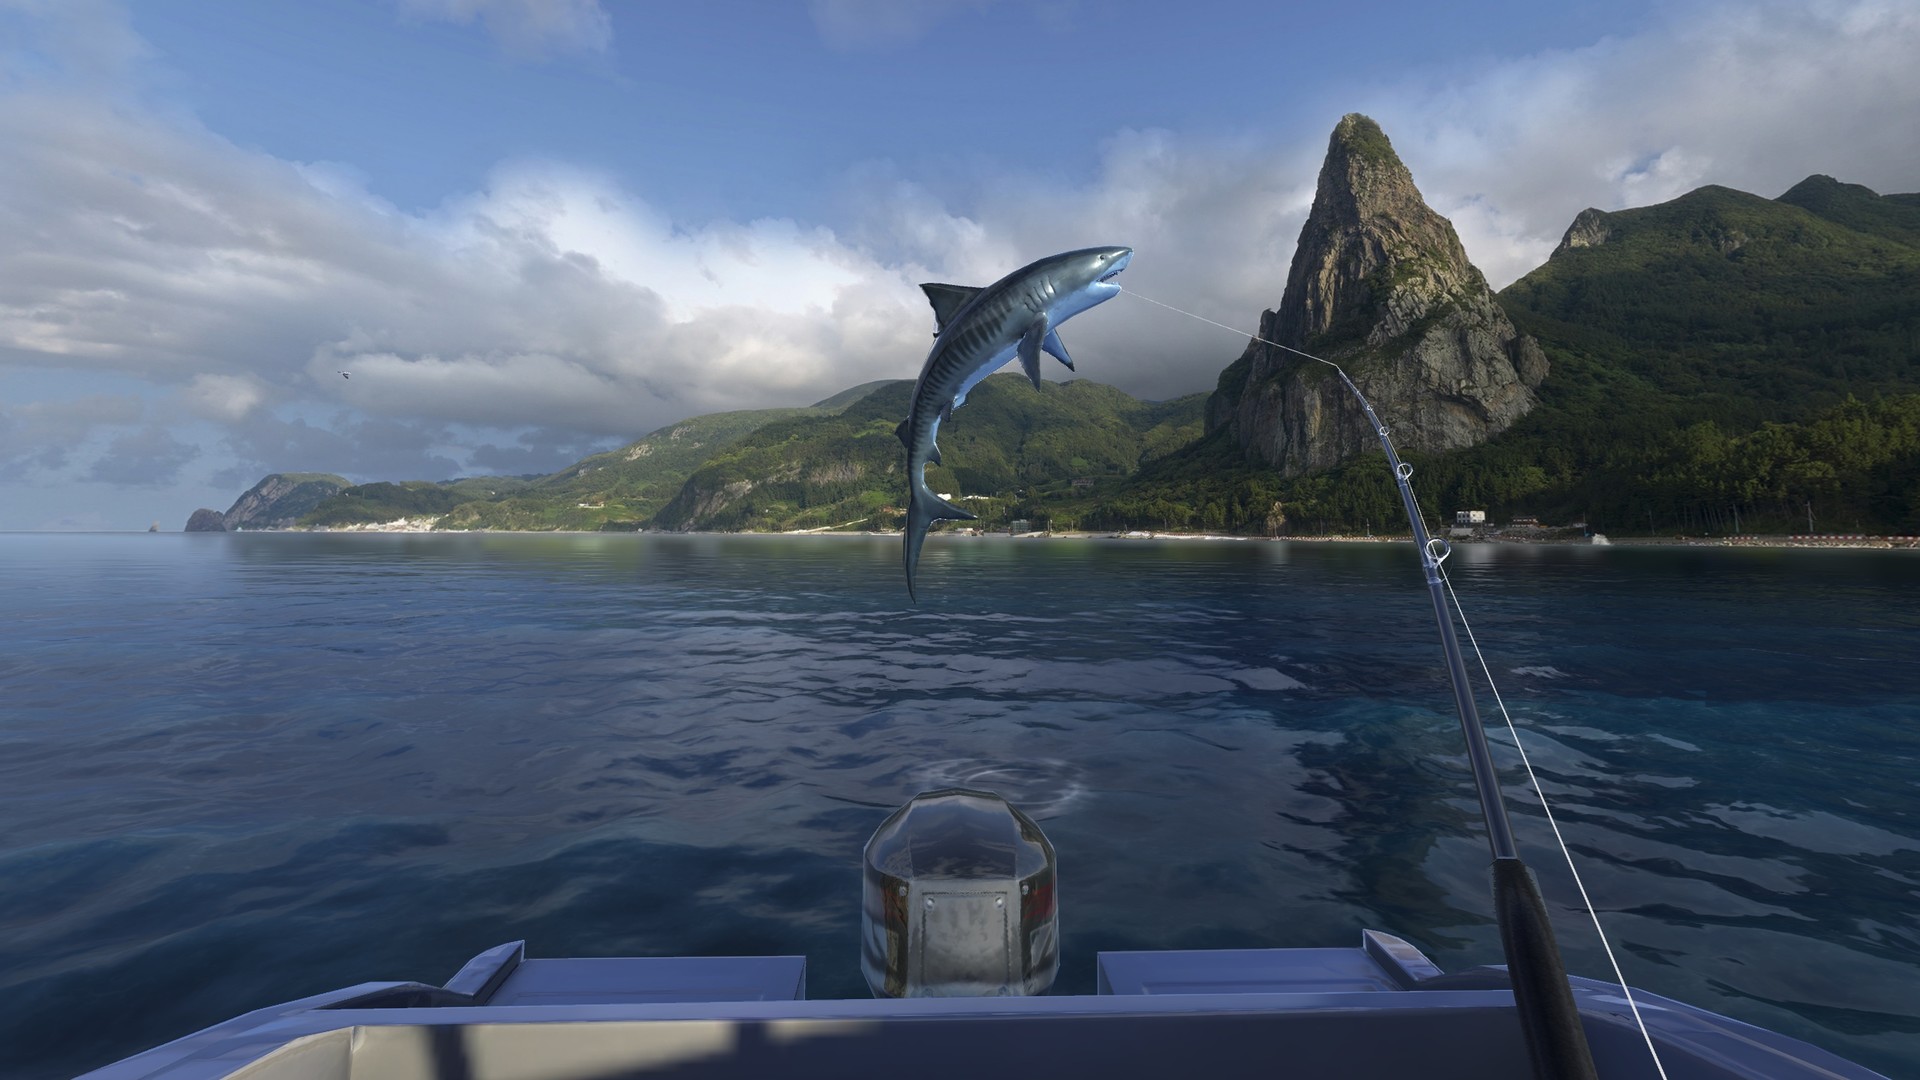 Oculus Quest 游戏《真实钓鱼DLC 解锁版》Real VR Fishing DLC